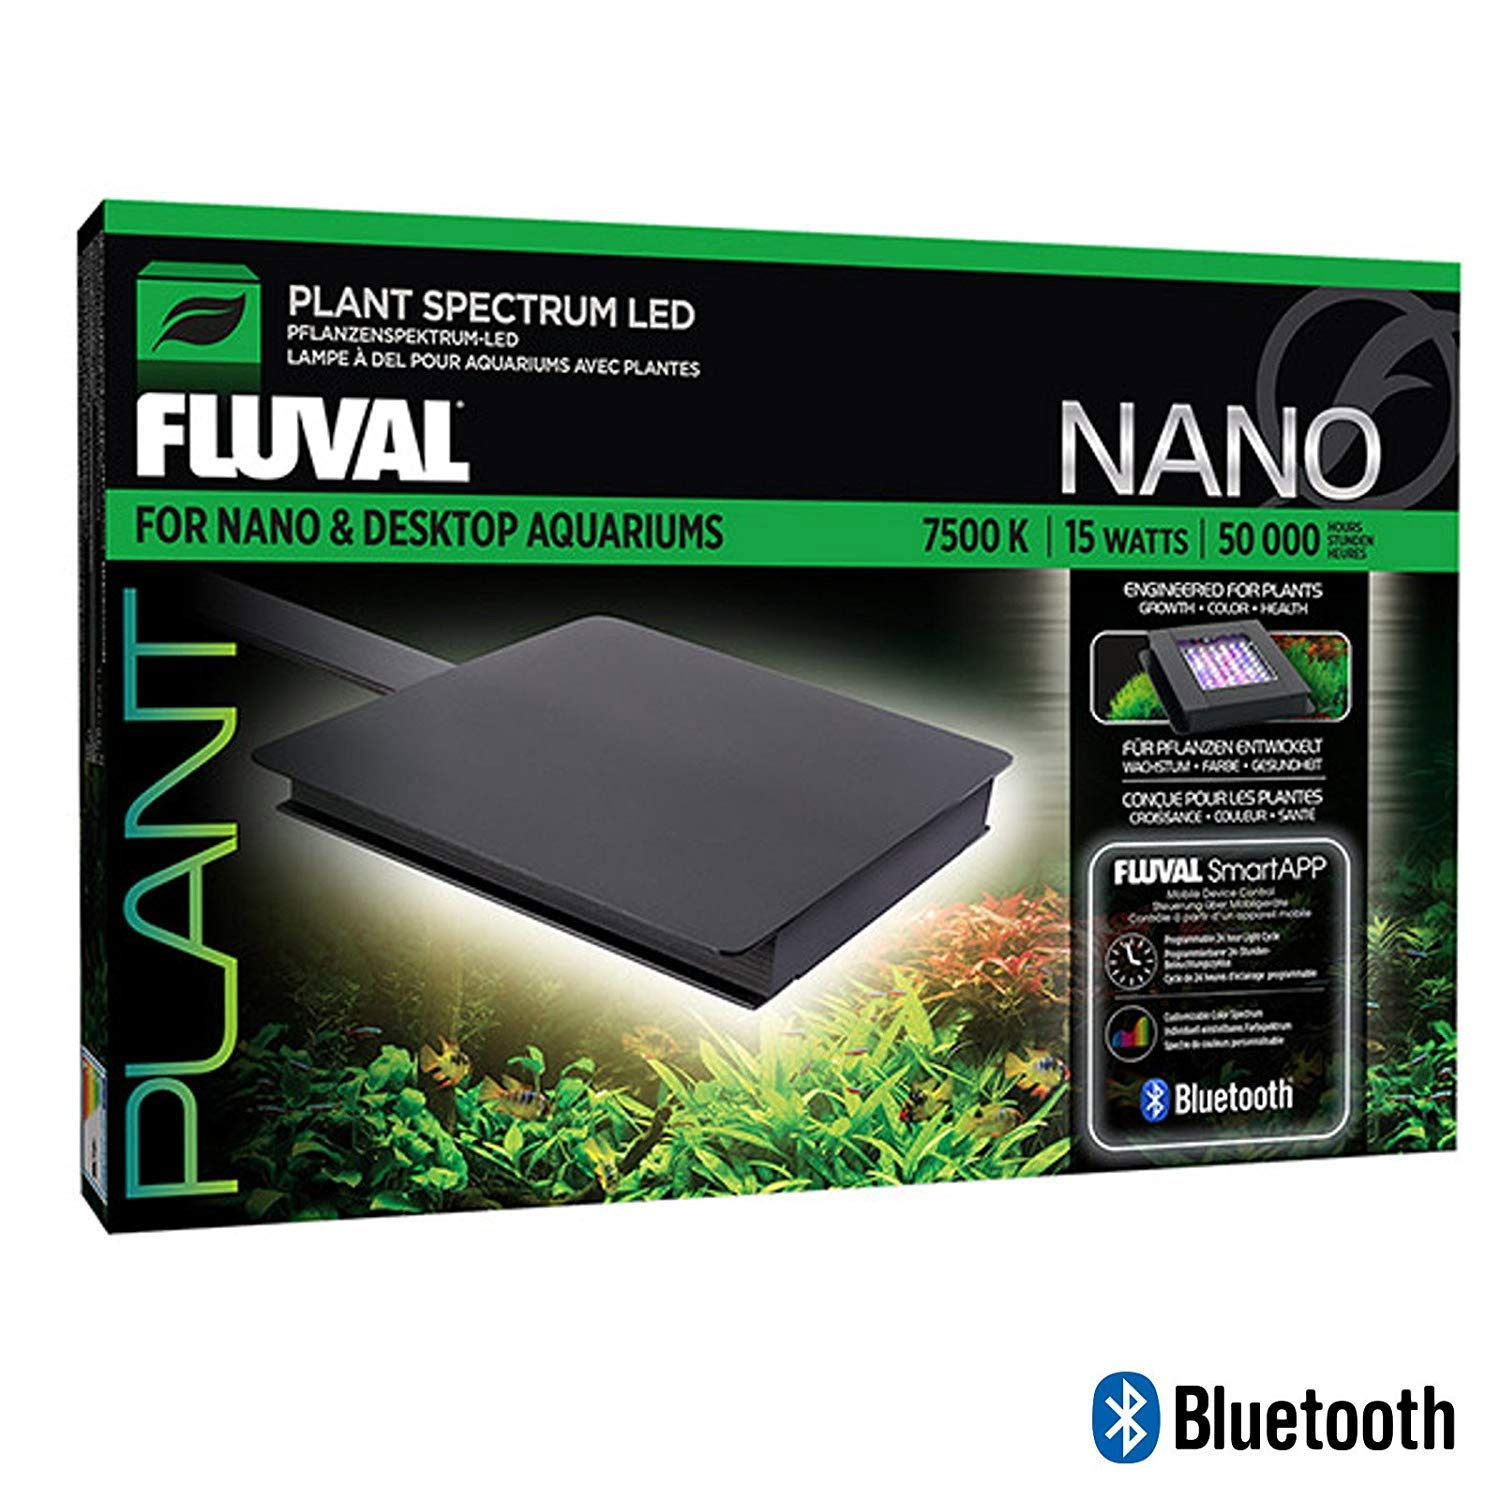 Hagen Fluval Plant Bluetooth Nano LED Aquarium Light